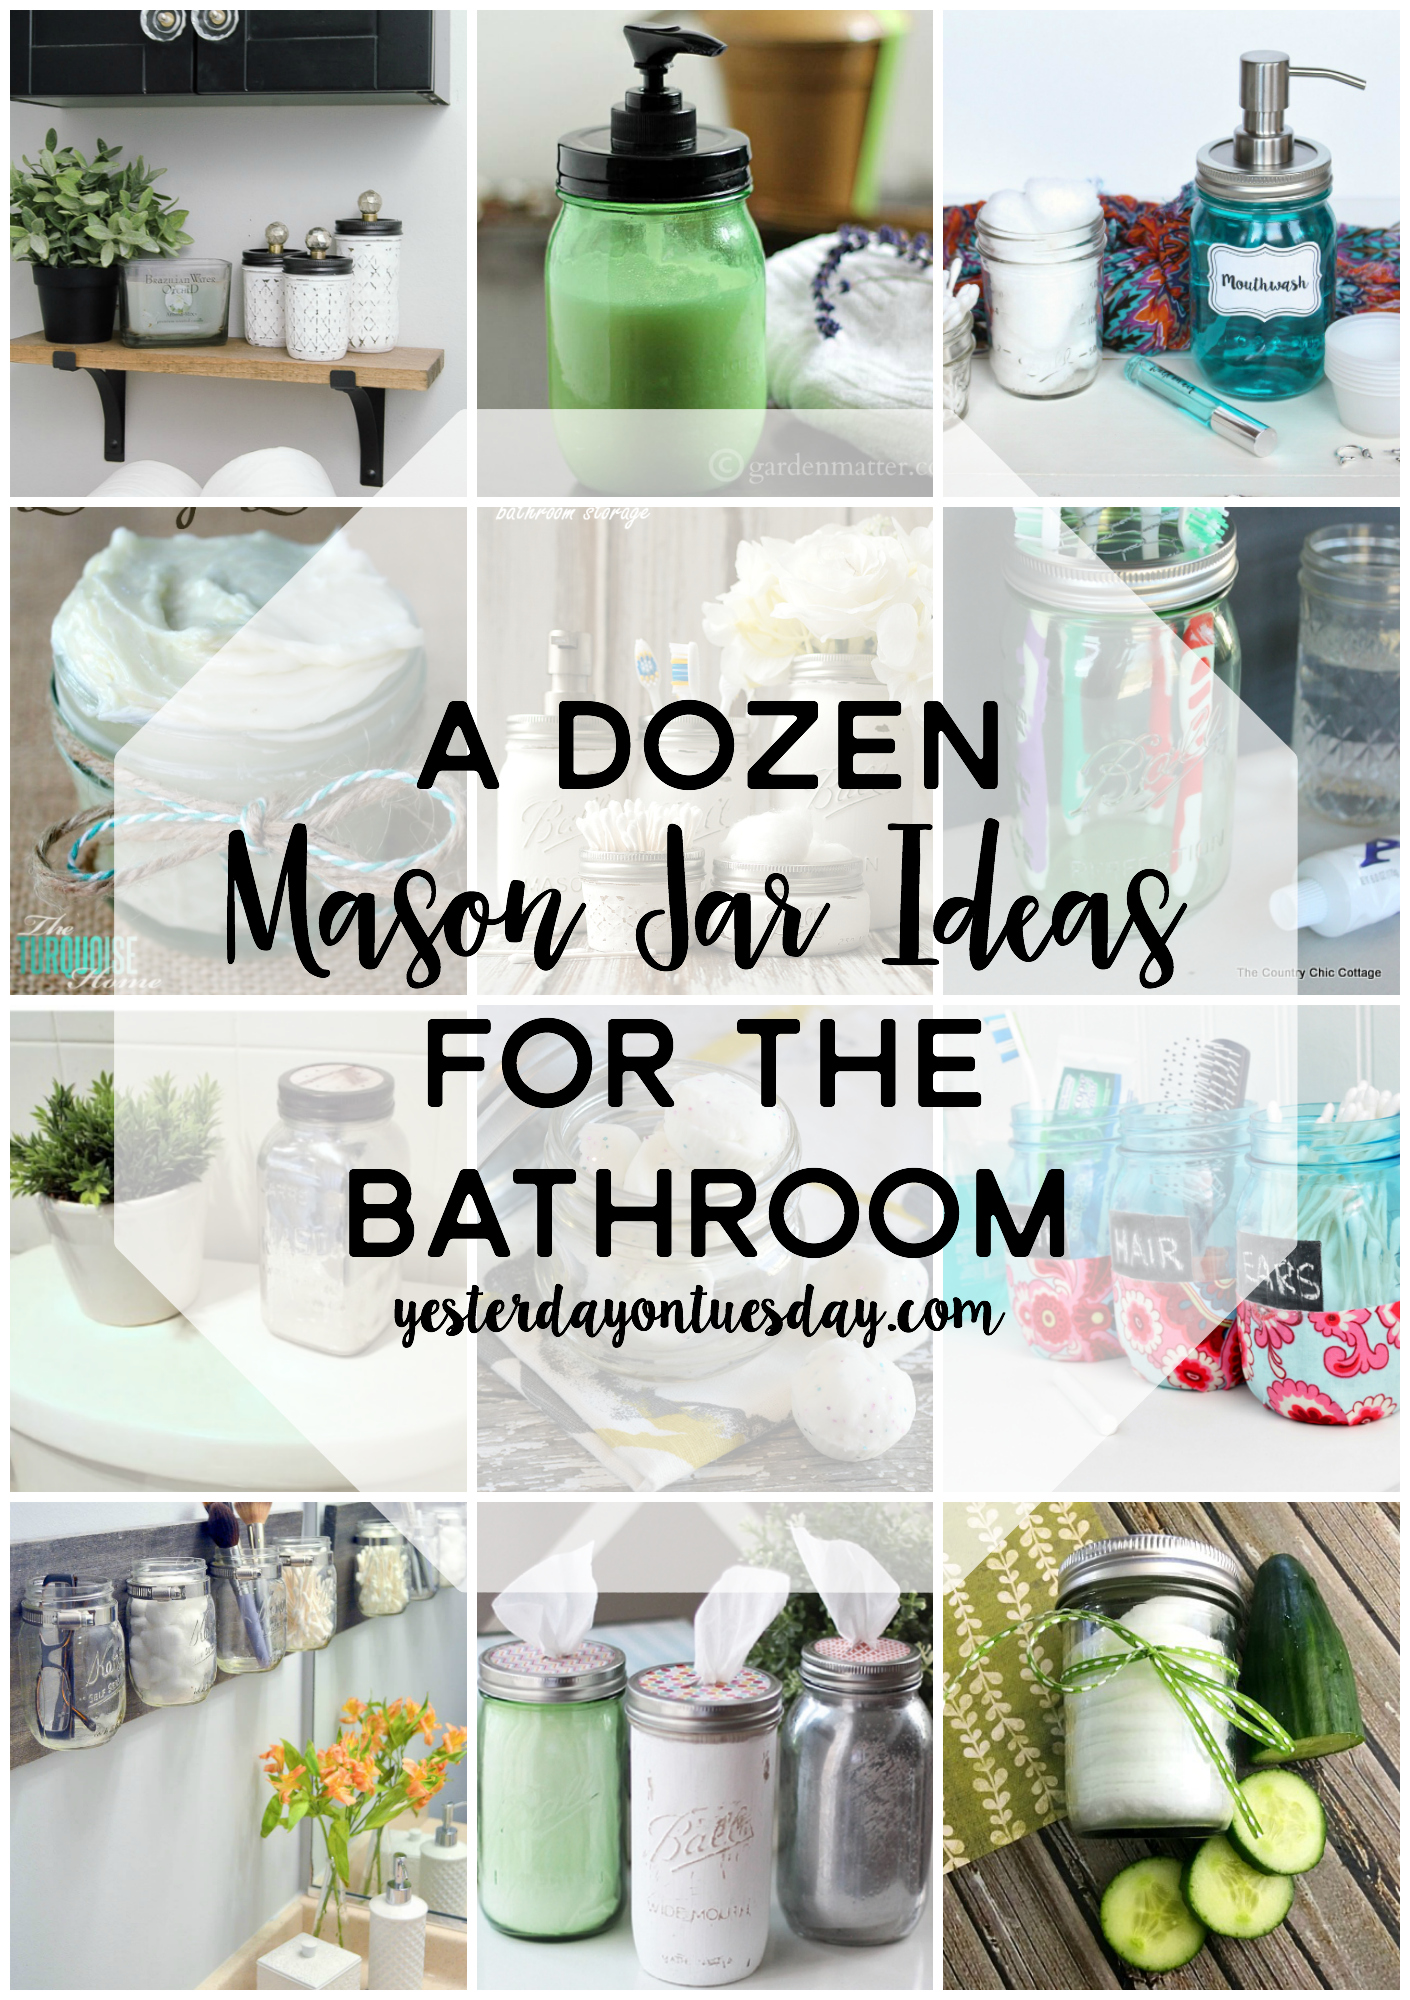 A Dozen Mason Jar Ideas For The Bathroom Yesterday On Tuesday